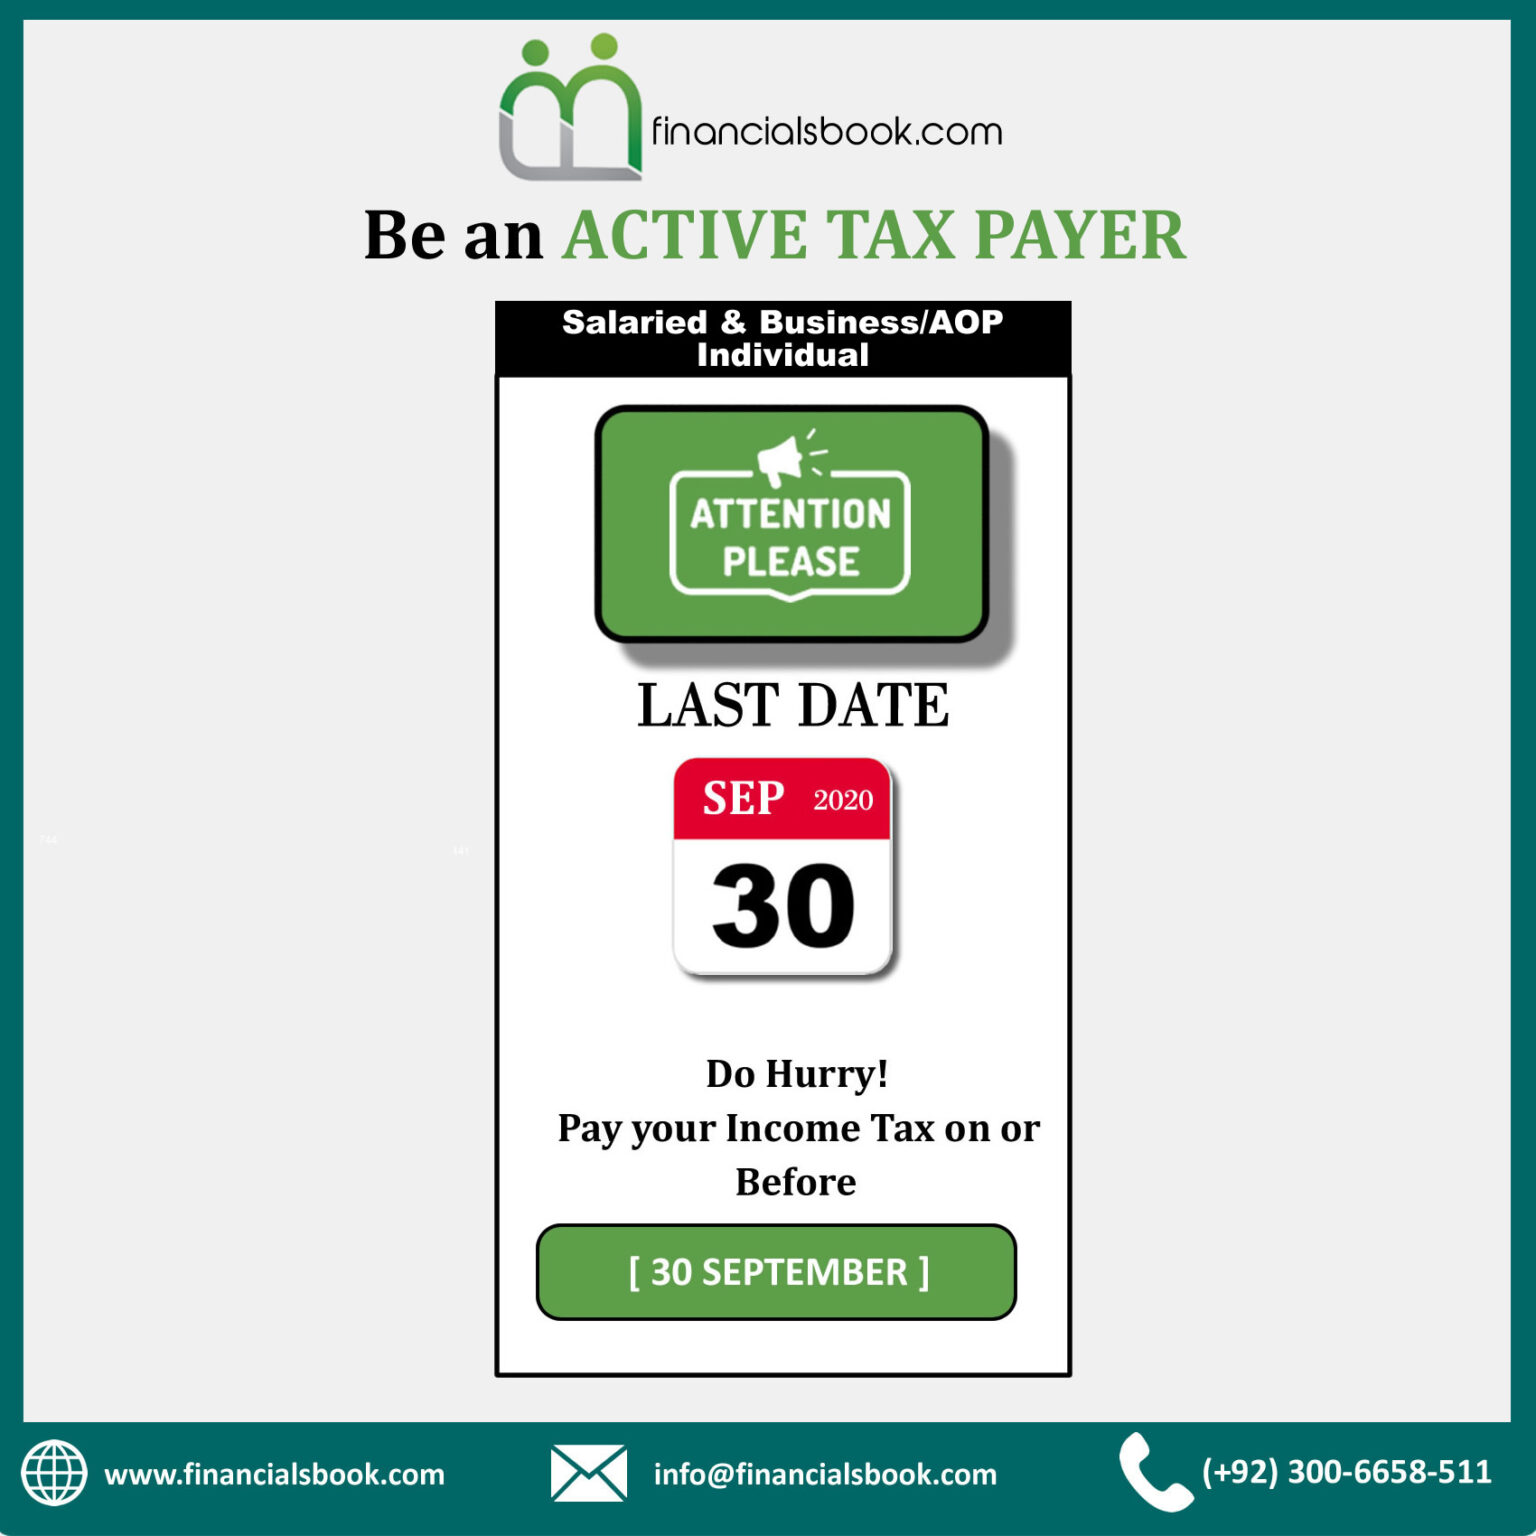 income-tax-return-deadline-30th-september-2020-financialsbook